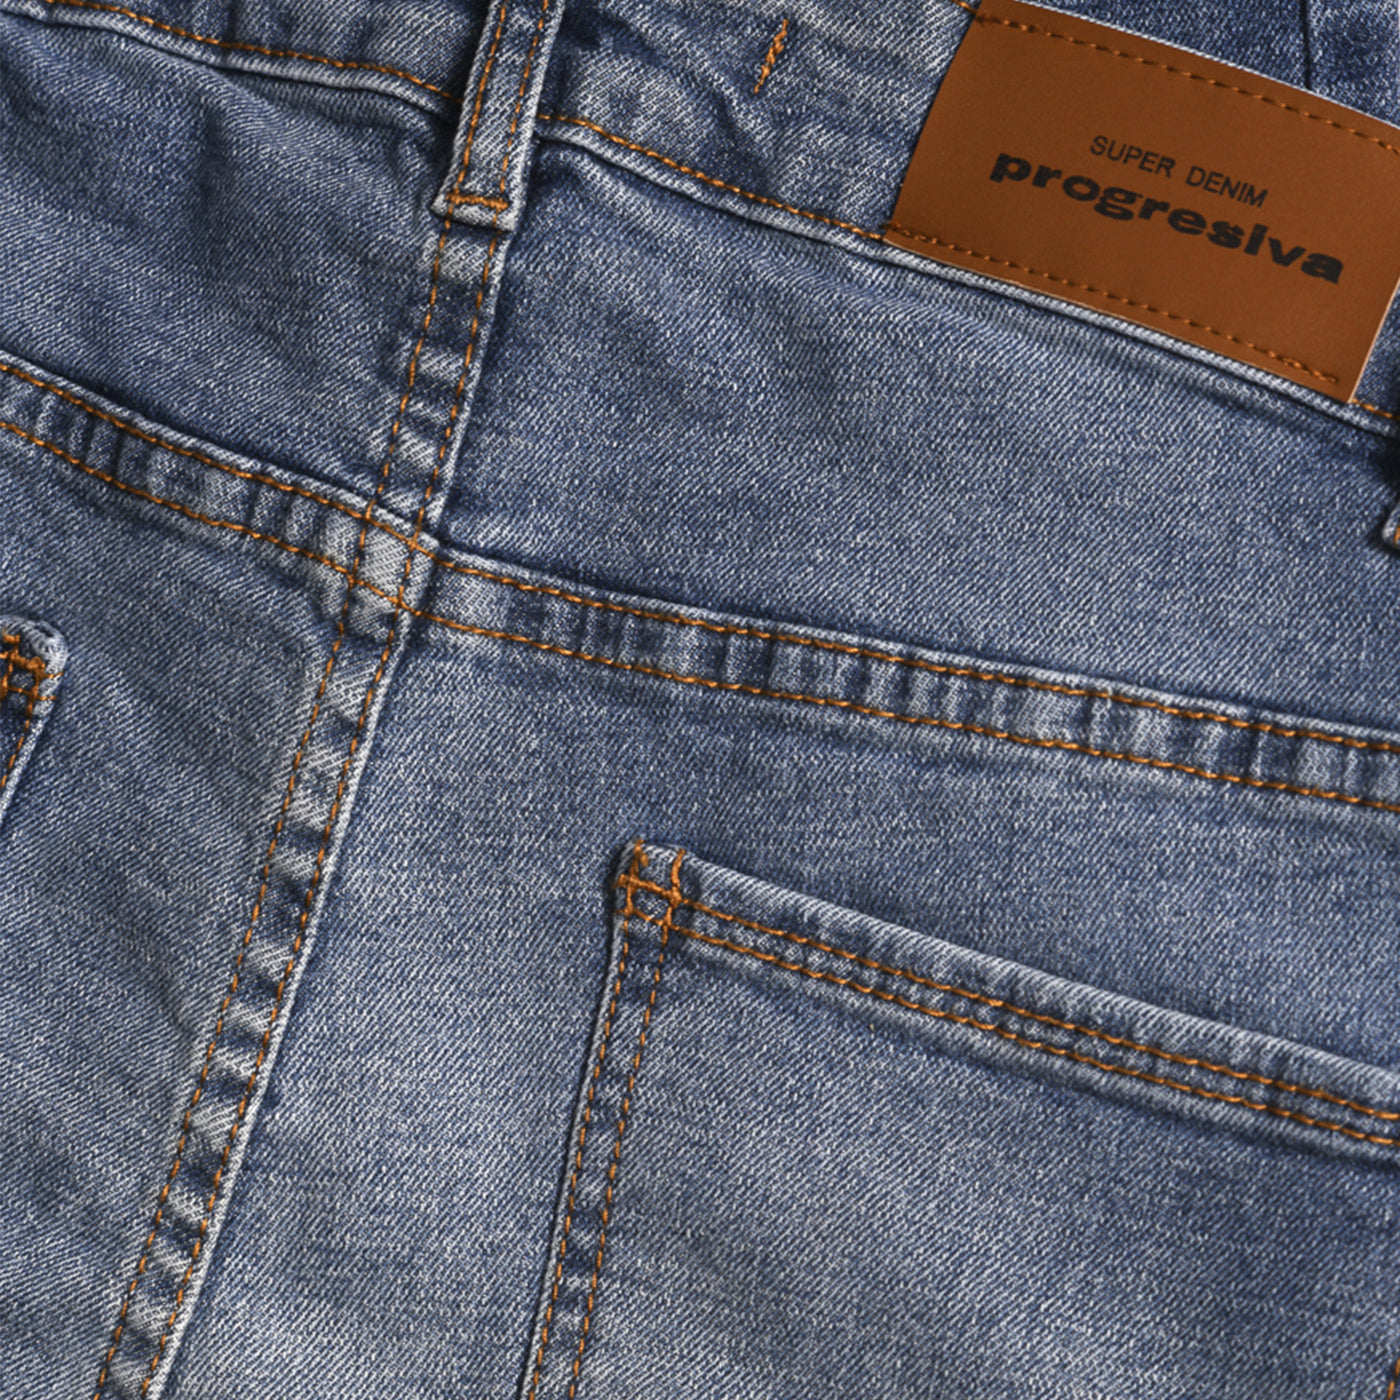 Jeans super denim - XELA - skinny